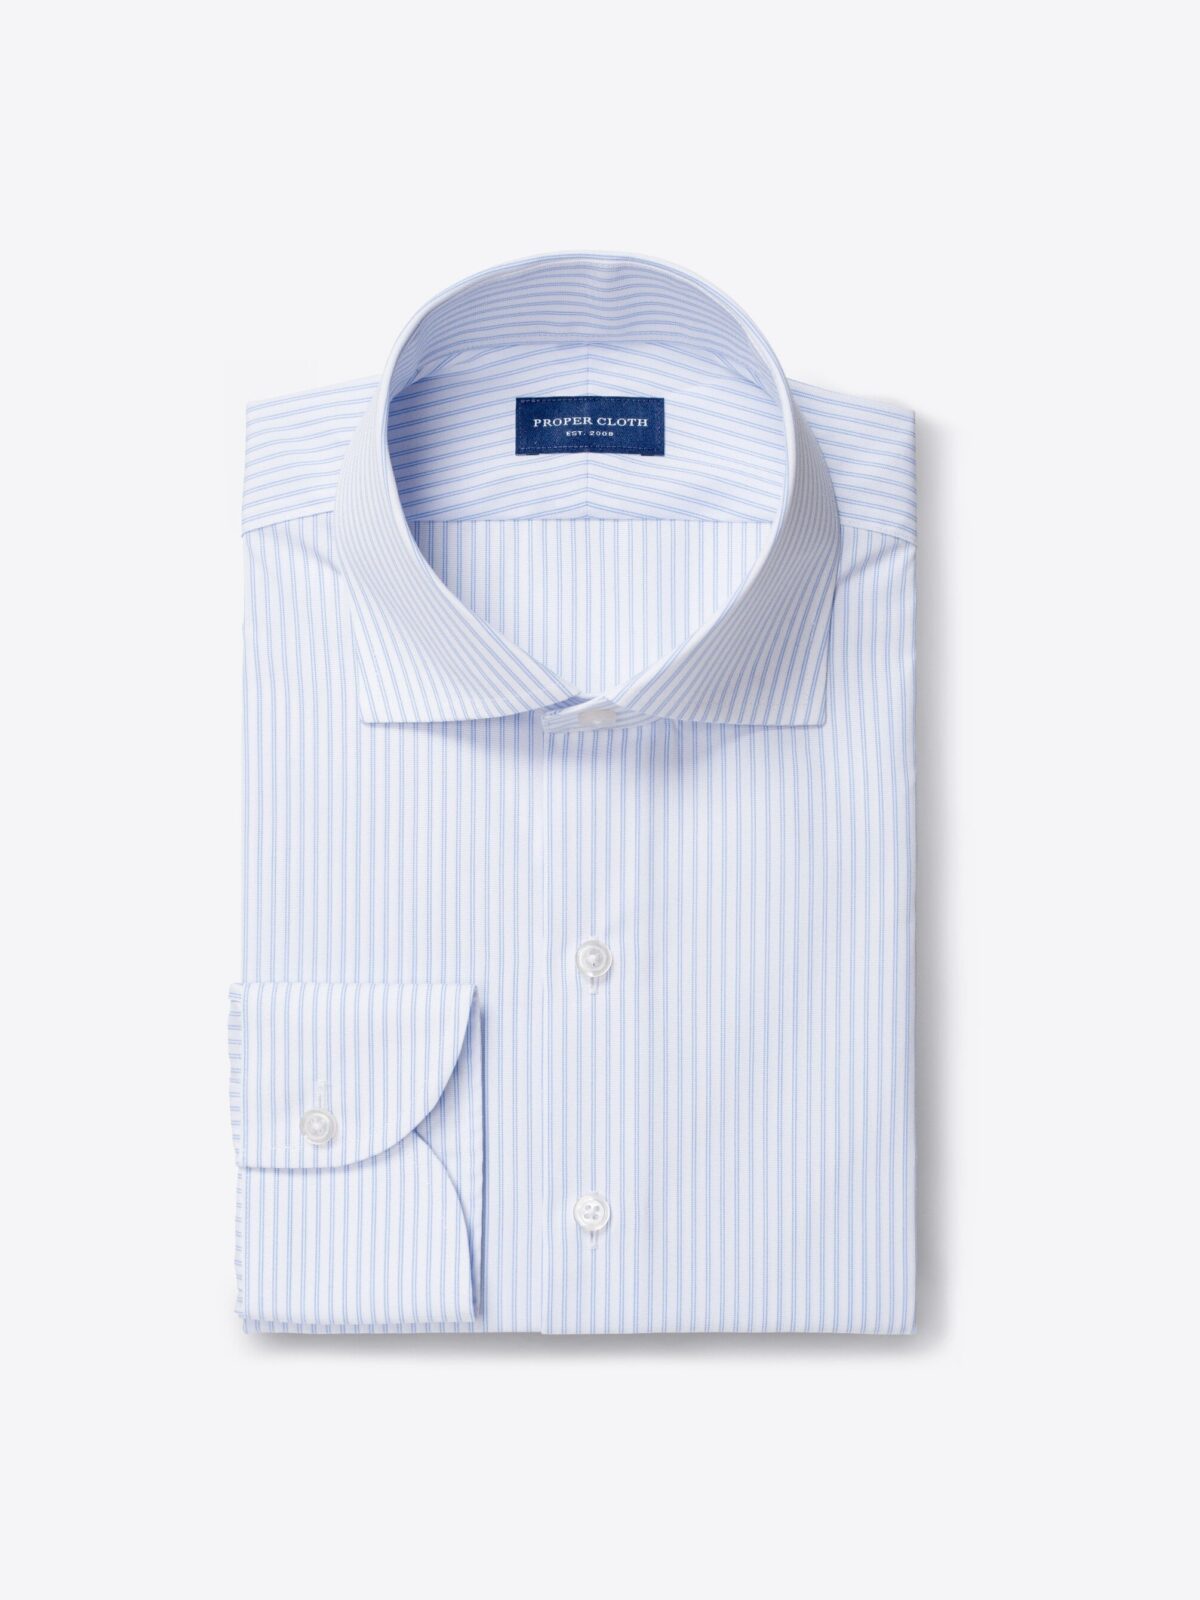 Waverly Light Blue 120s Double Stripe Shirt by Proper Cloth